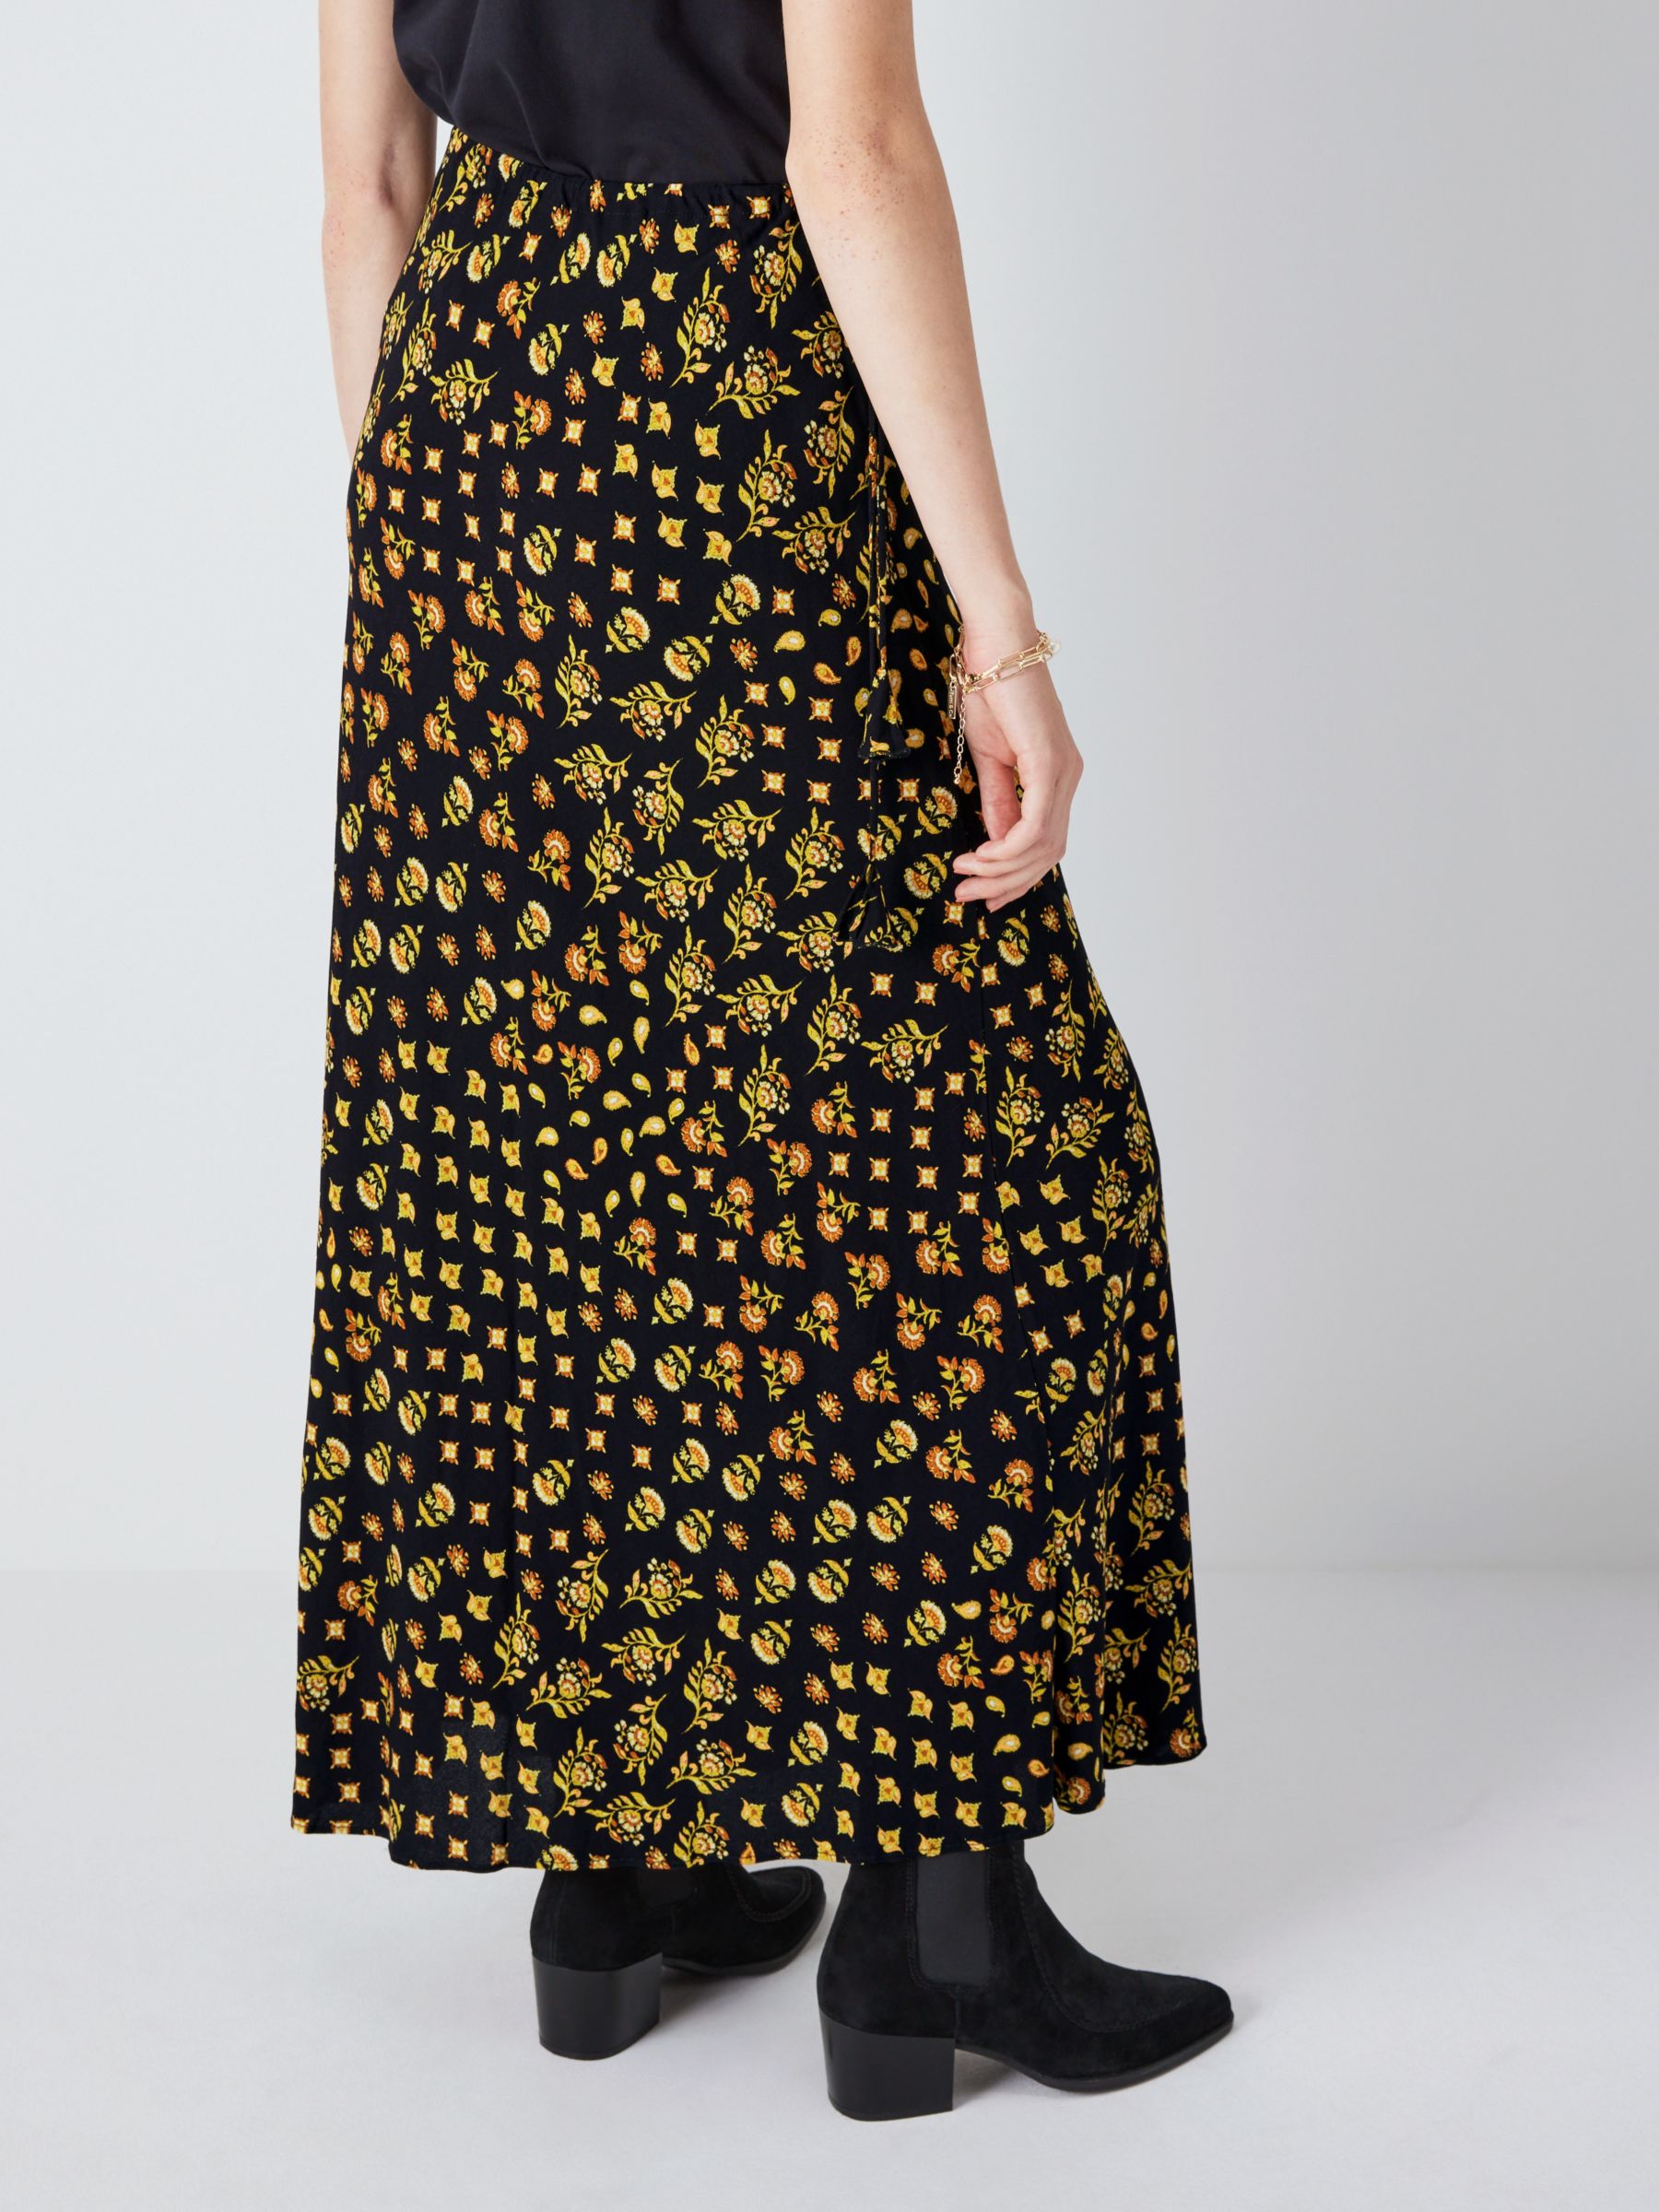 AND/OR Nyla Woodblock Floral Maxi Skirt, Black/Multi at John Lewis ...